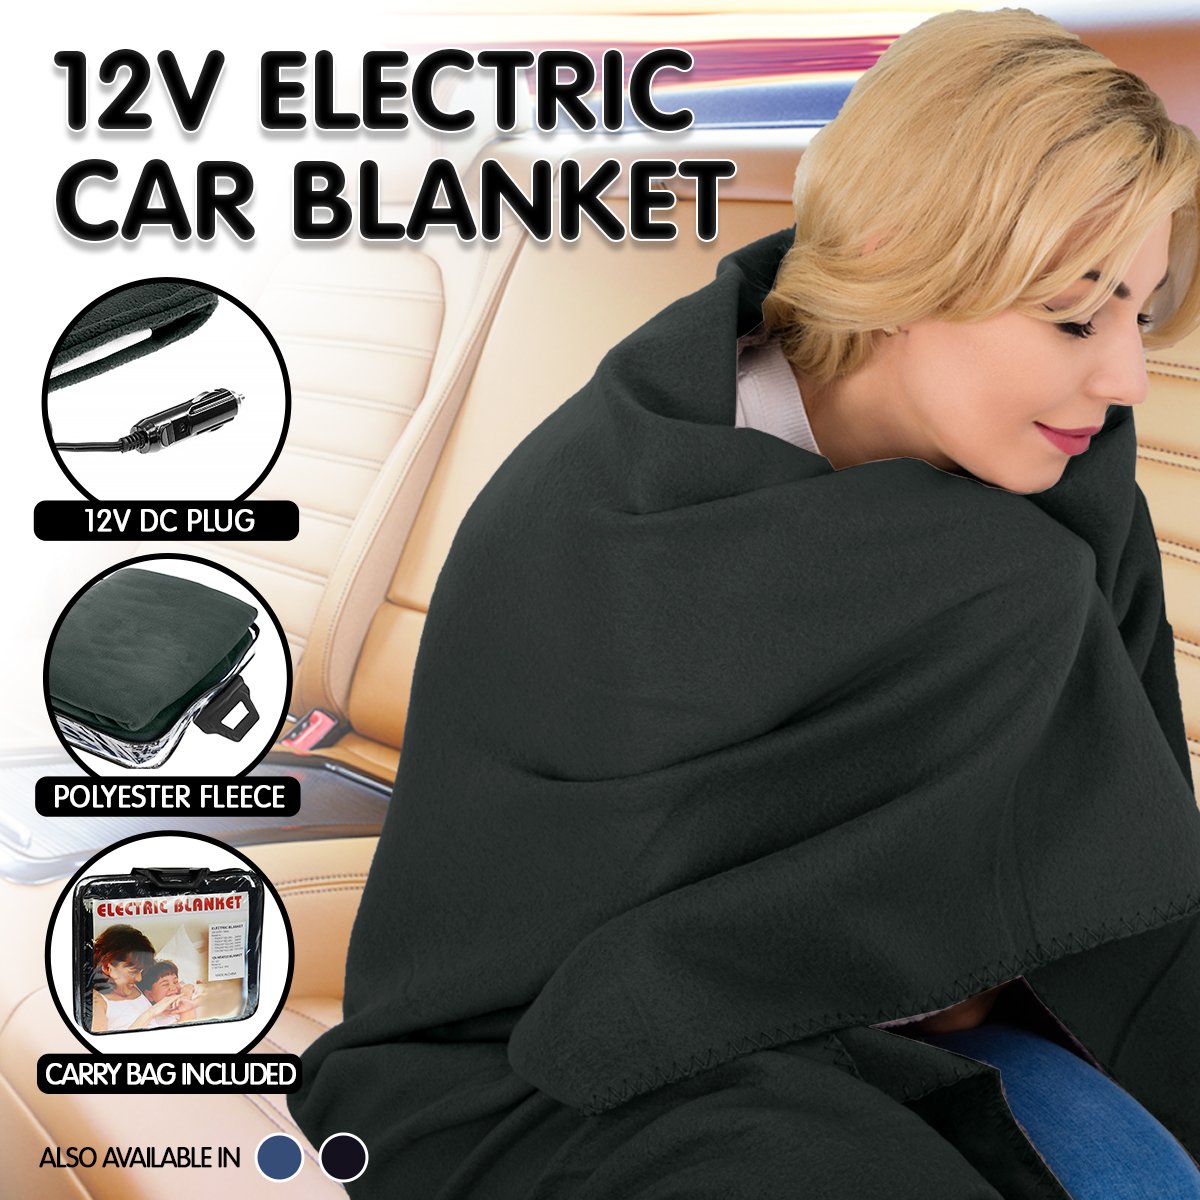 Laura Hill Heated Electric Car Blanket 150x110cm 12V - Black